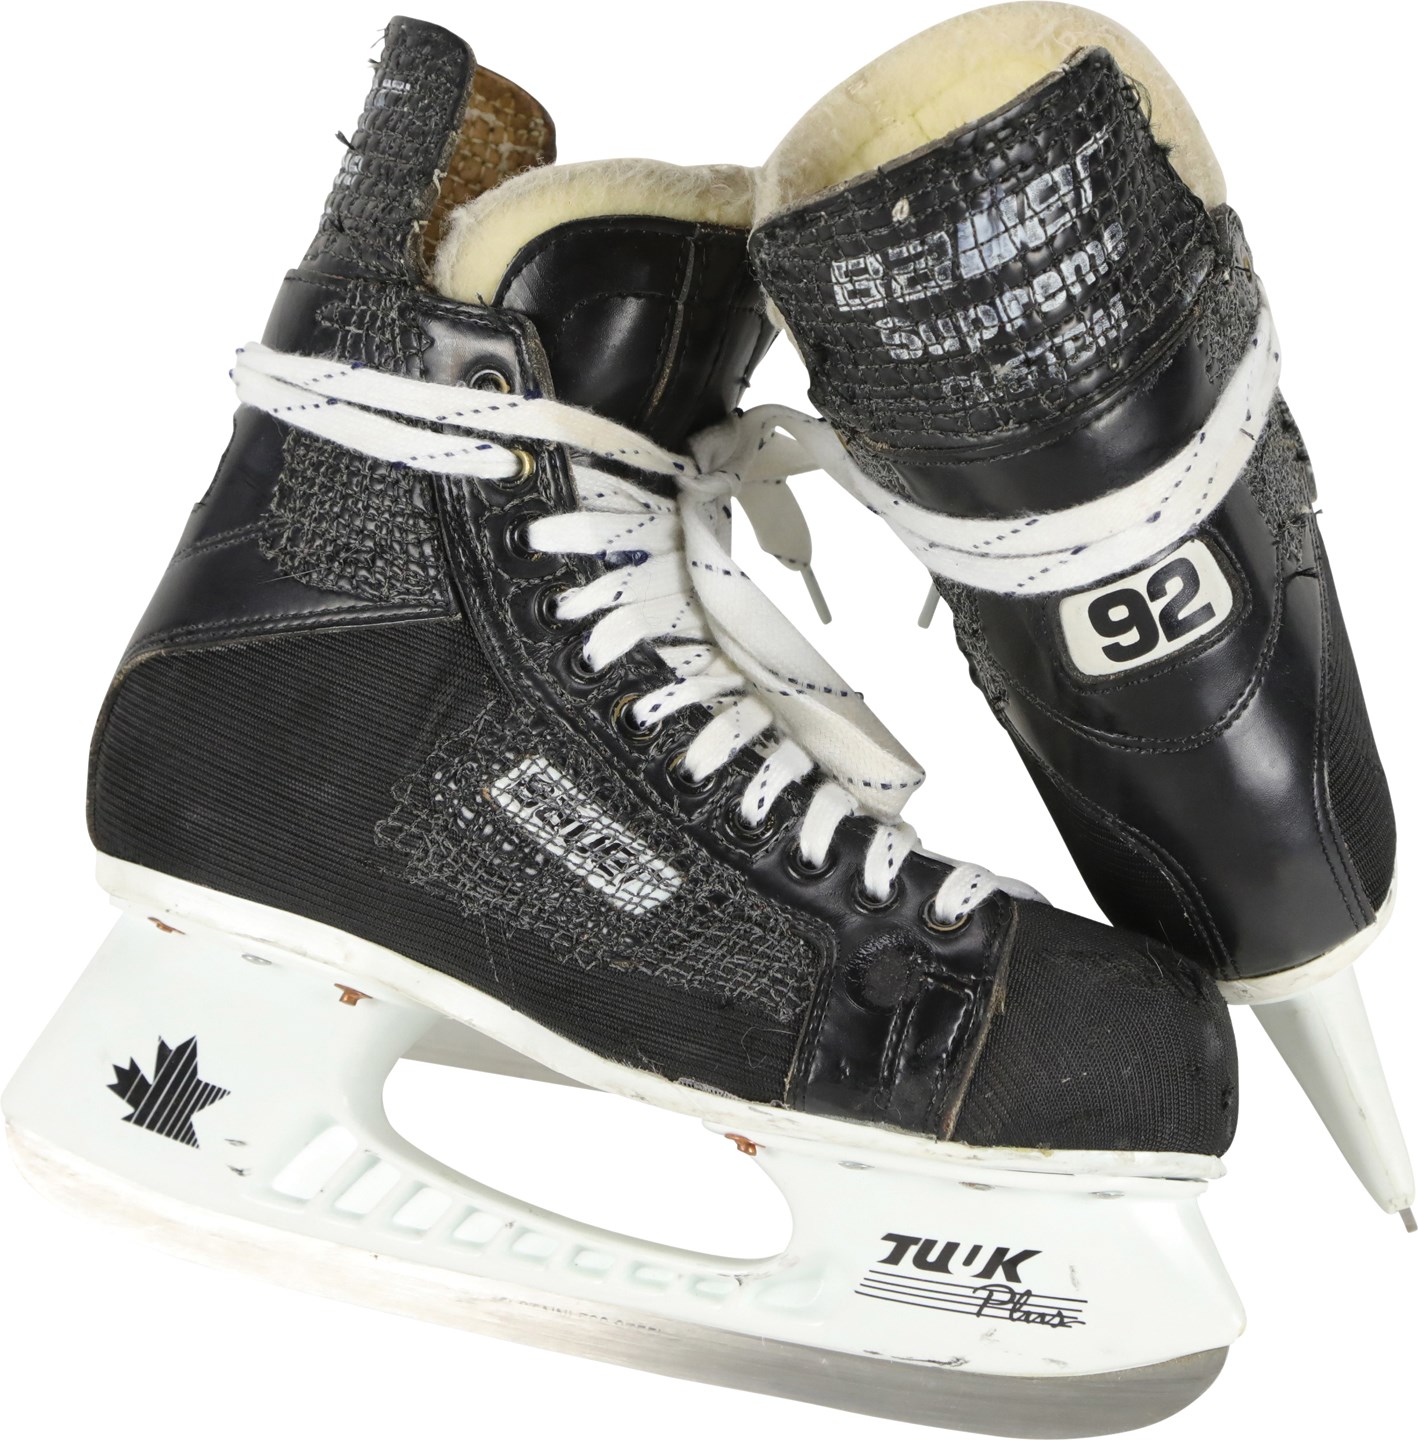 Hockey - 1991-92 Paul Coffey Record Breaking 311th Goal Game Worn Skates